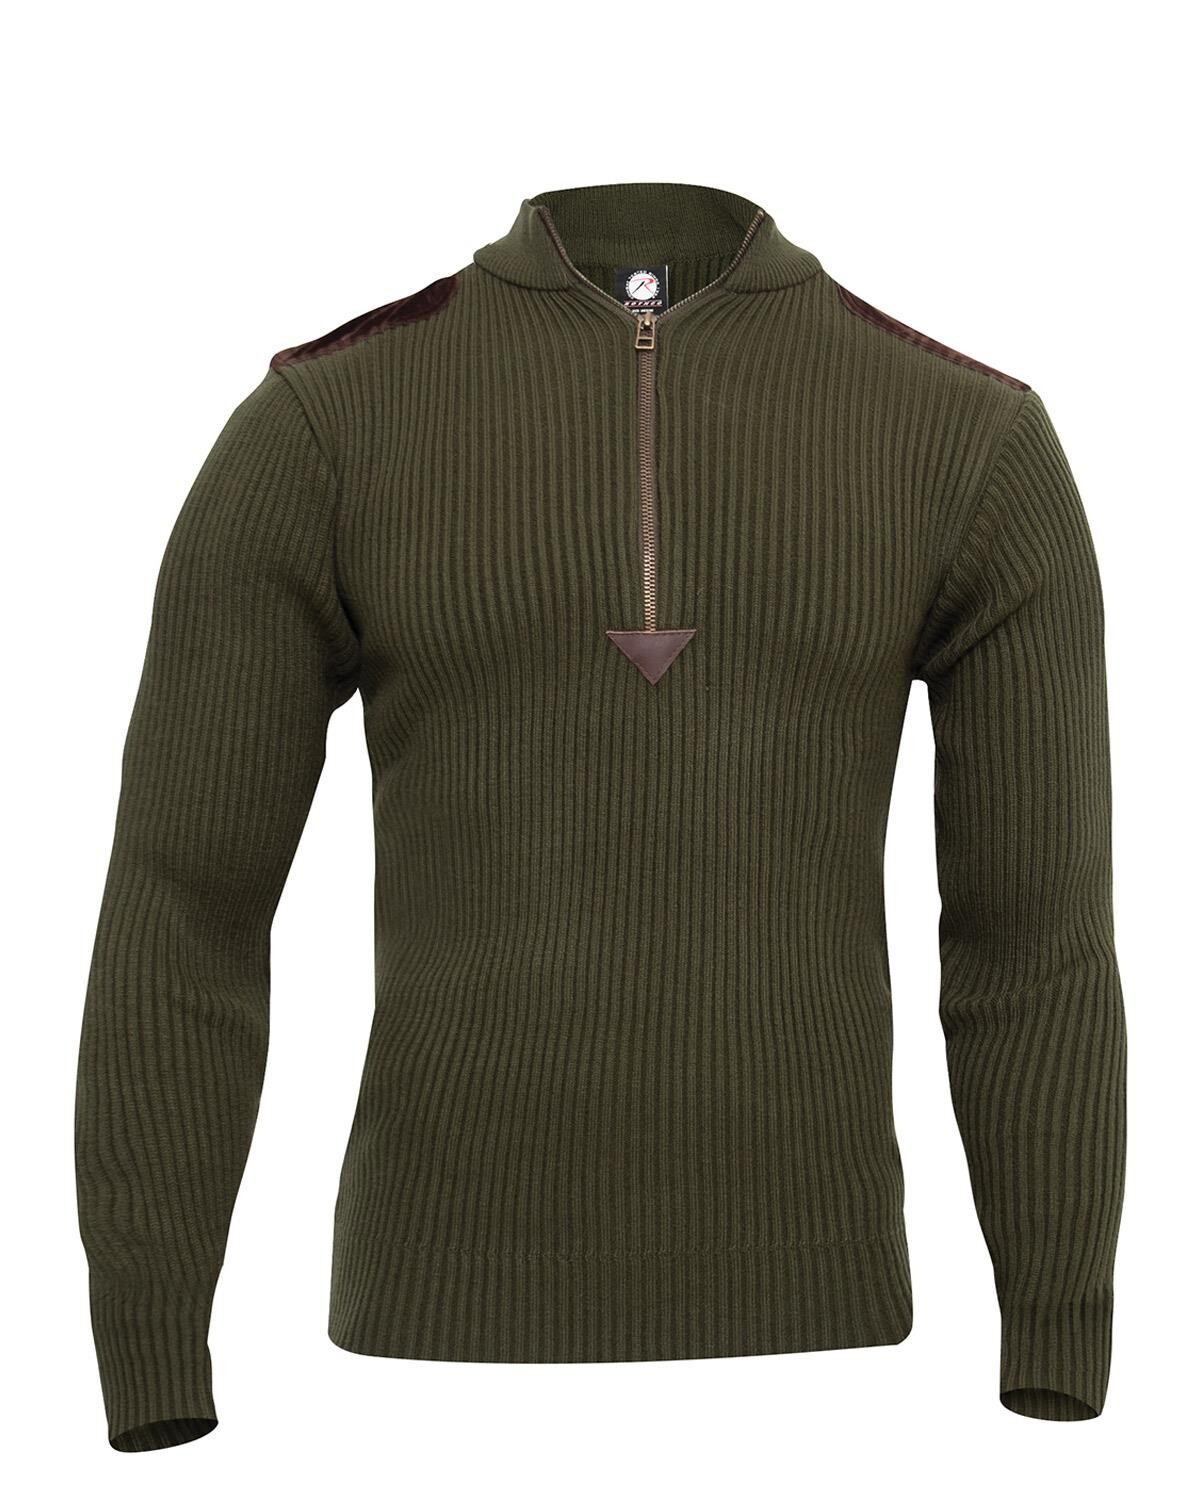 9: Rothco Commando Sweater (Oliven, 2XL)